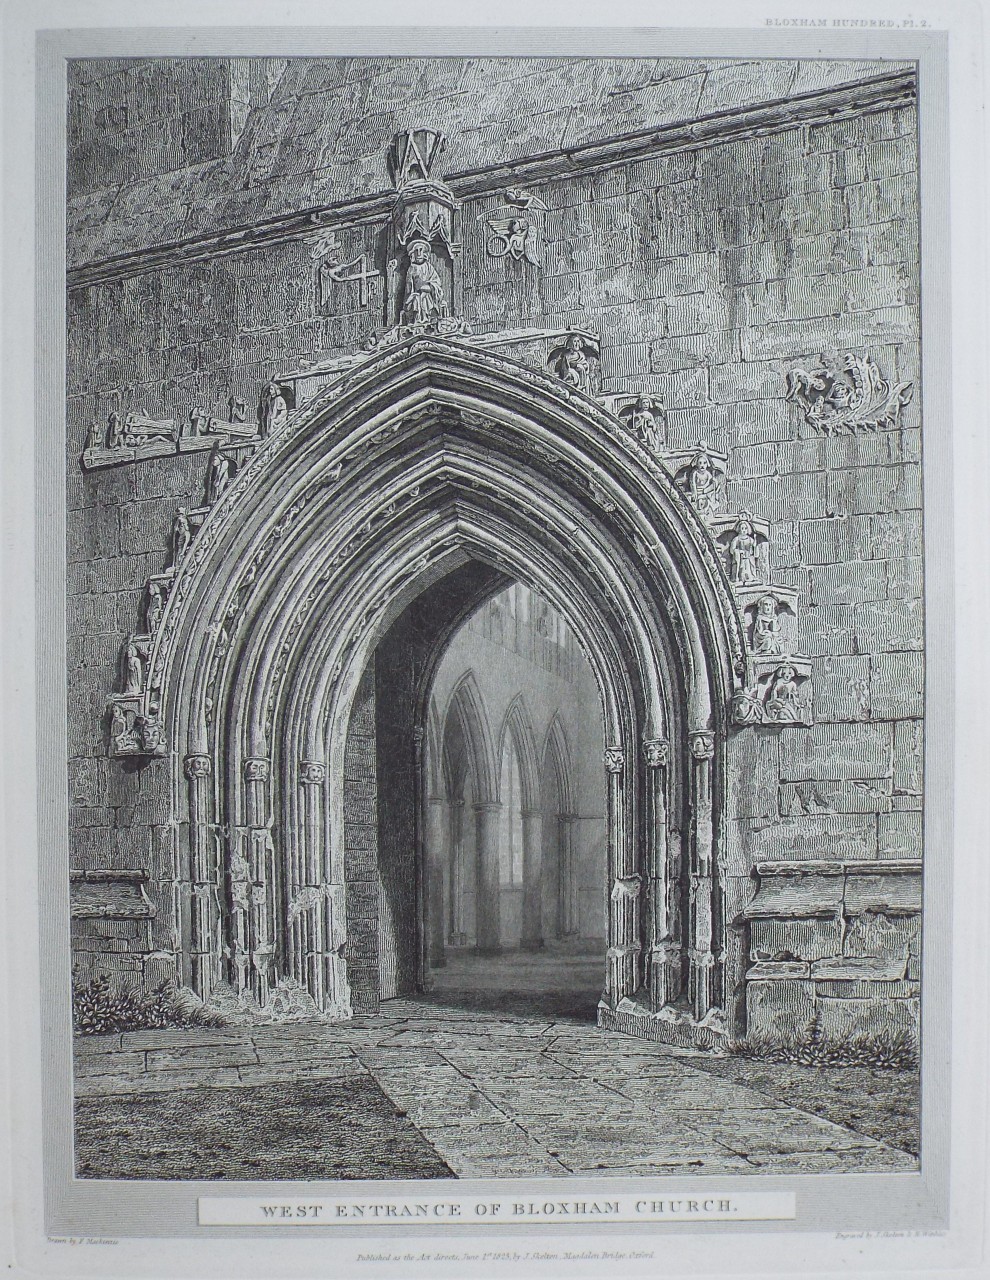 Print - West Entrance of Bloxham Church. - Skelton